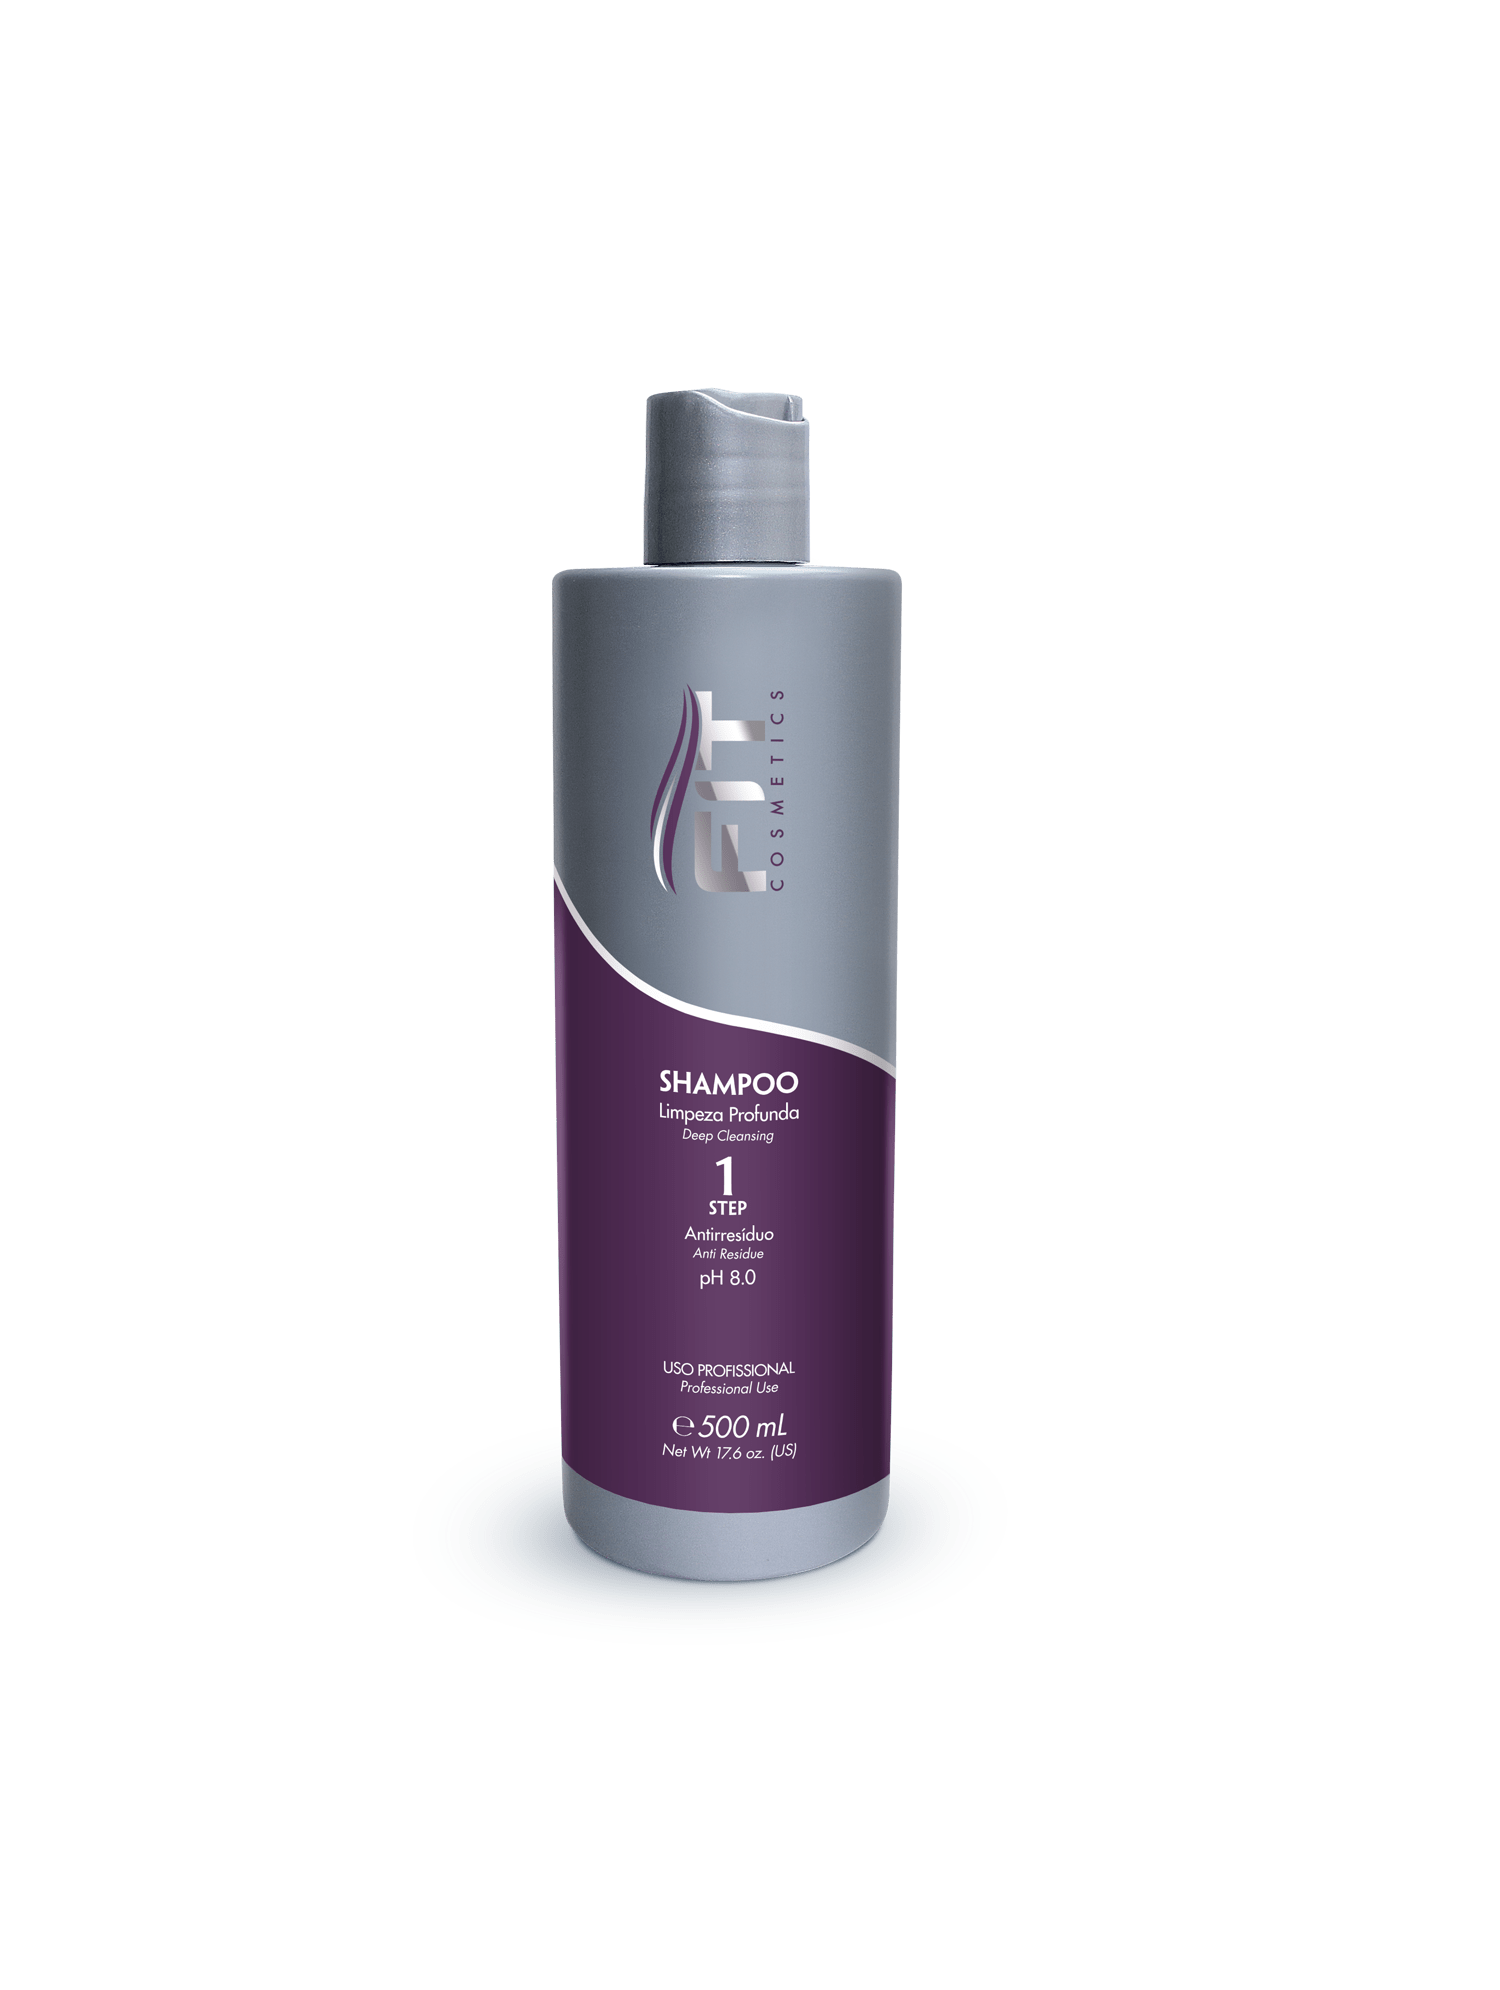 Shampoo Limpeza Profunda Tratamento Avançado 500ml Fit Cosmétics